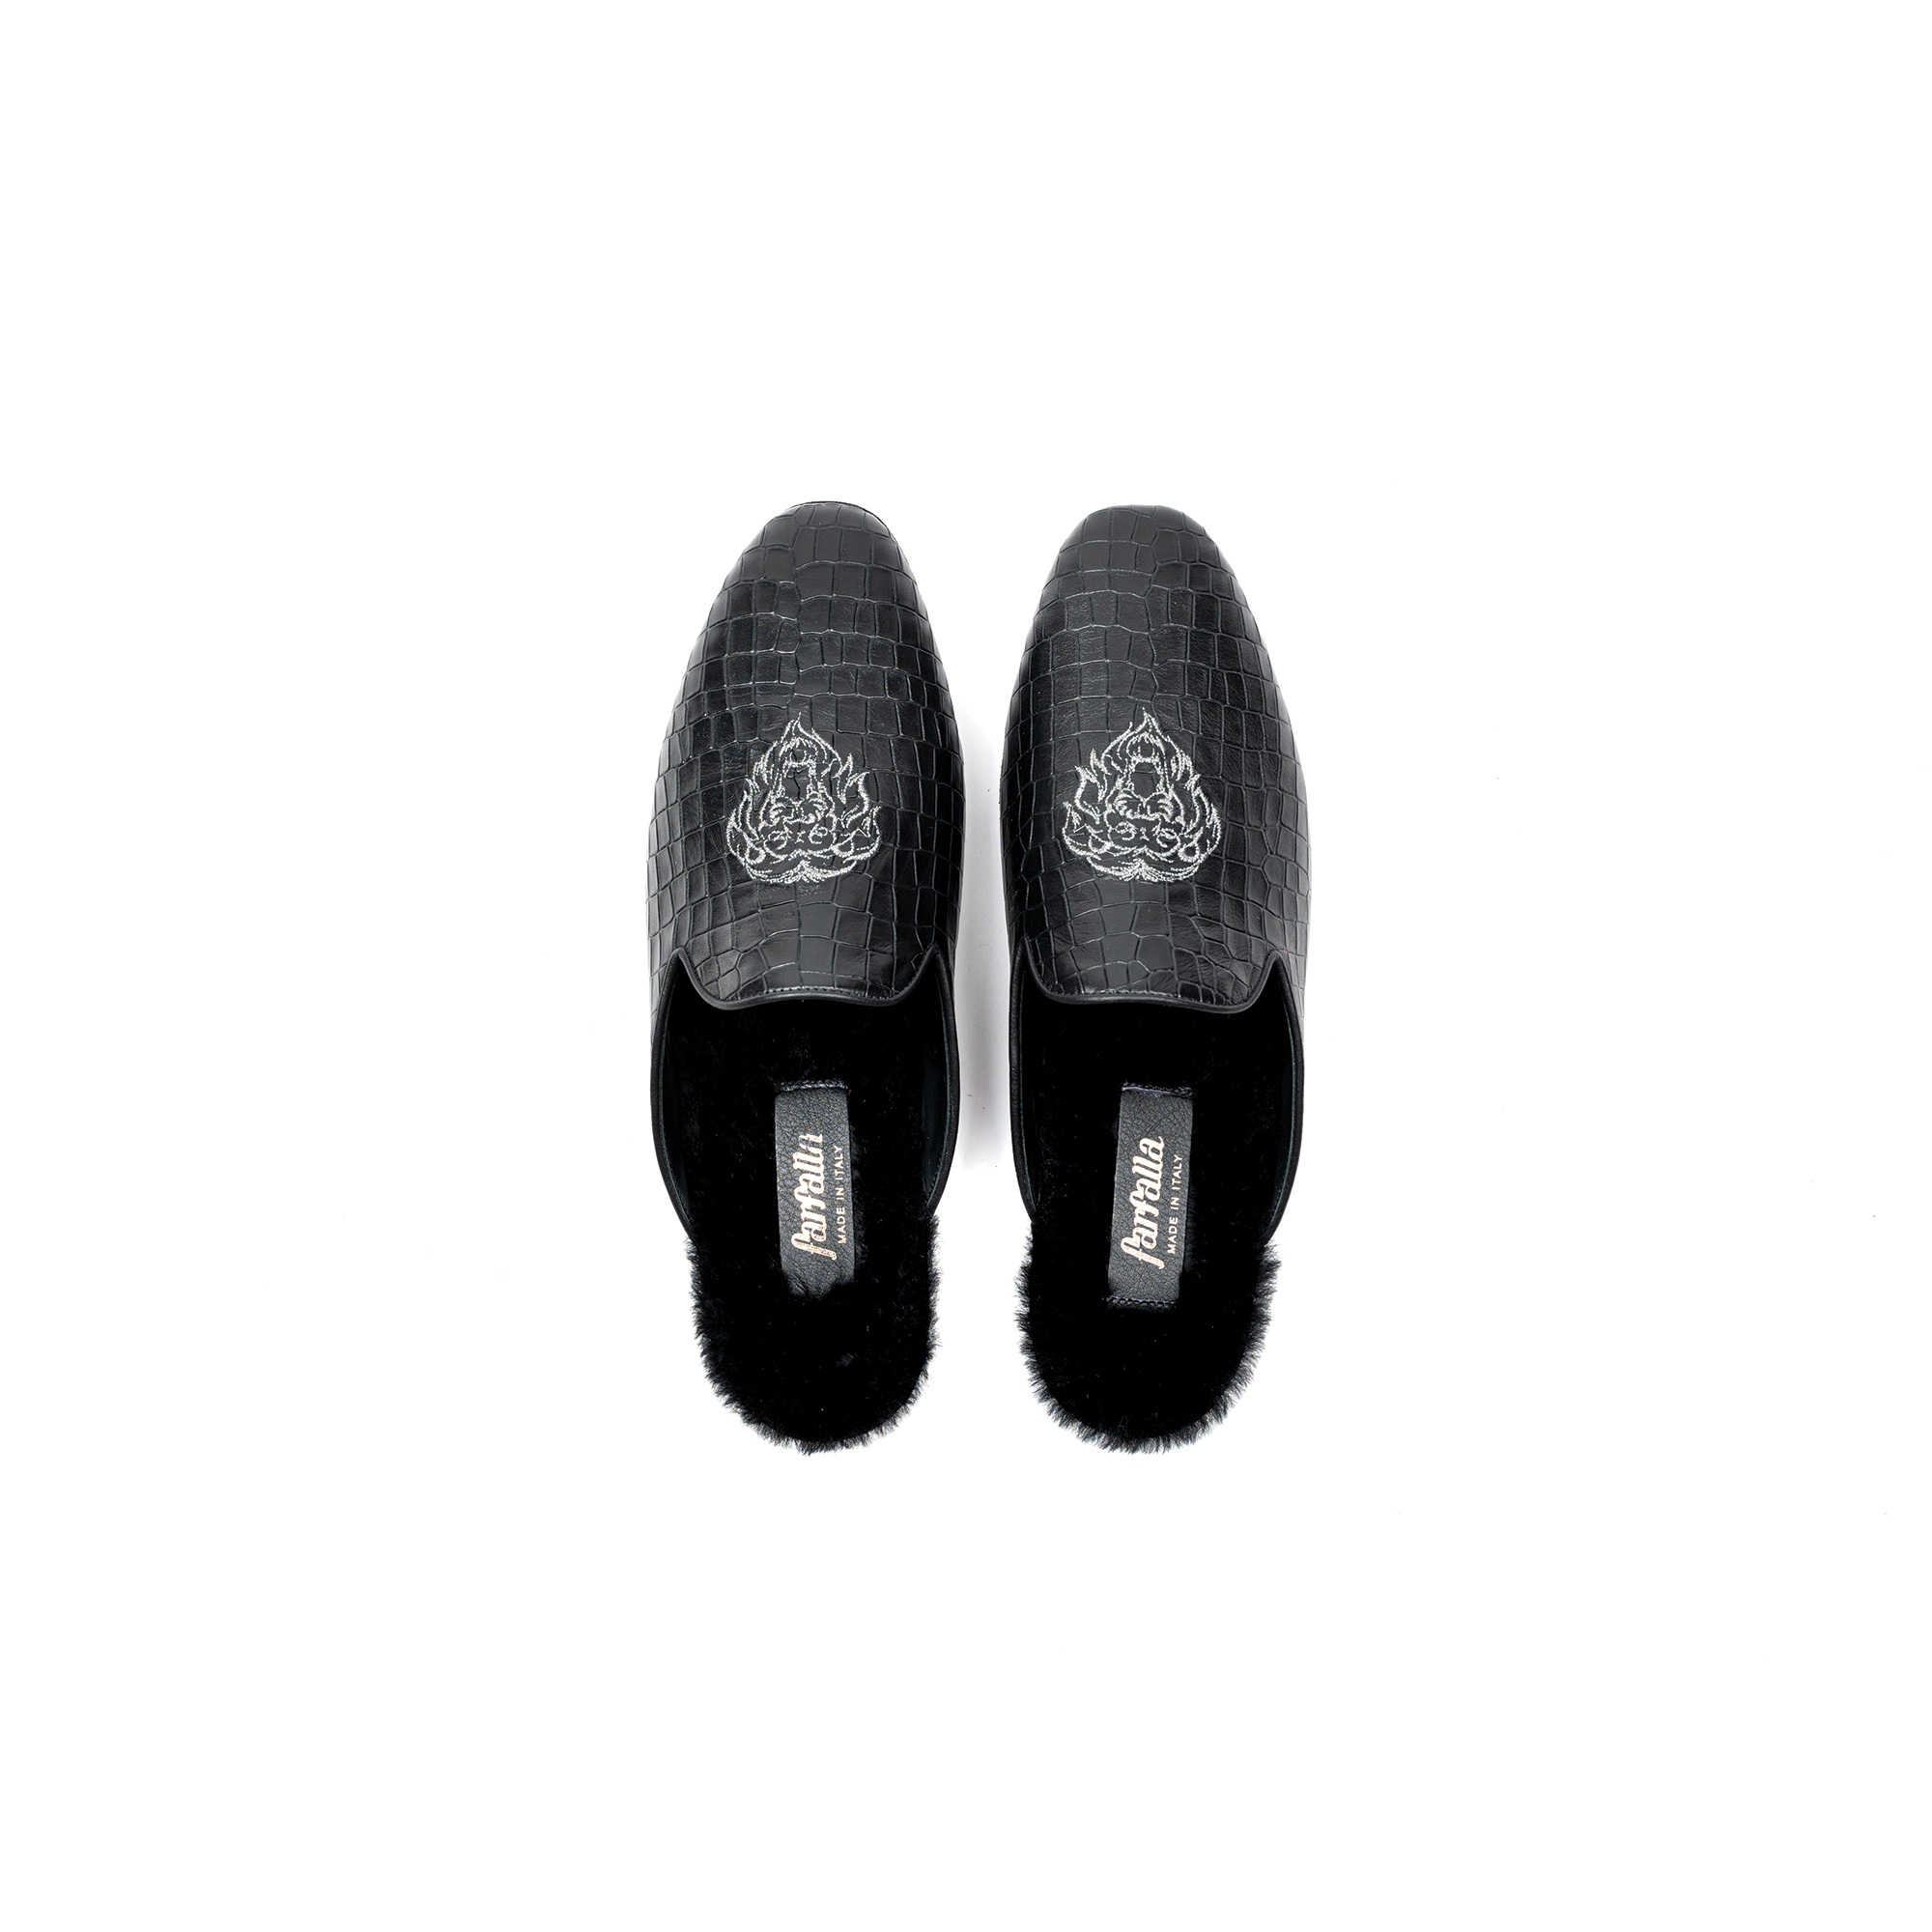 Luxury indoor slipper in black crocodile printed leather - Farfalla italian slippers